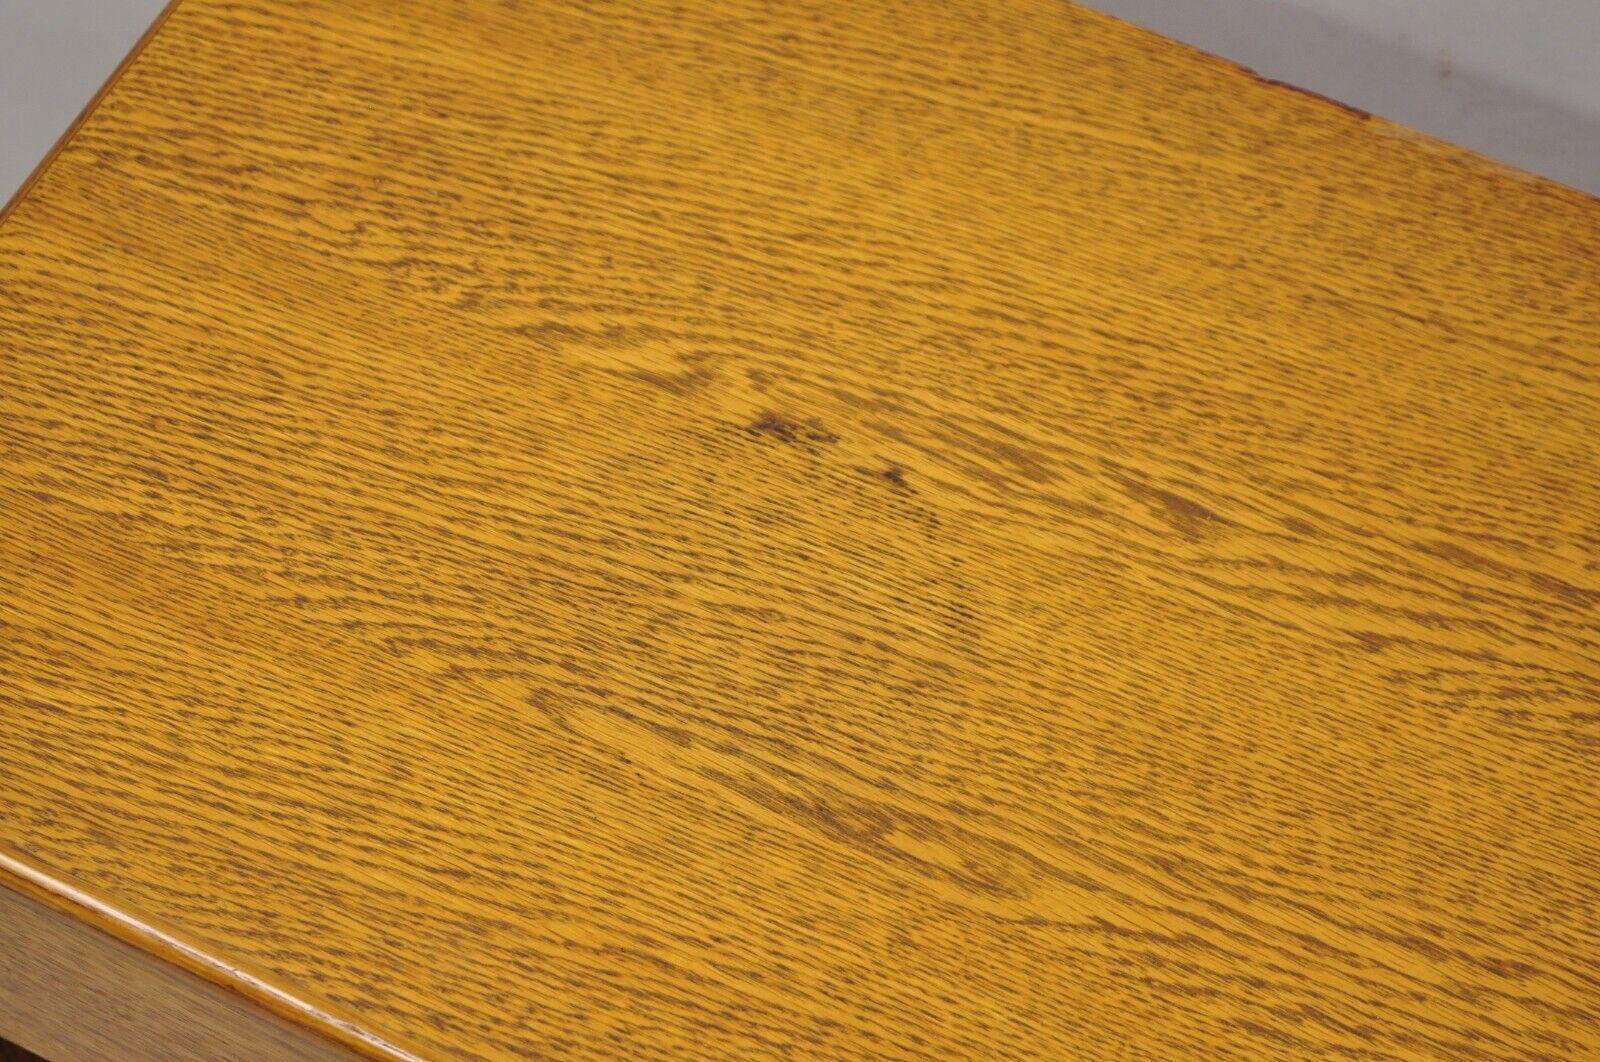 Lane Perception Oak Mid-Century Modern One Drawer Nightstand Side Table For Sale 3